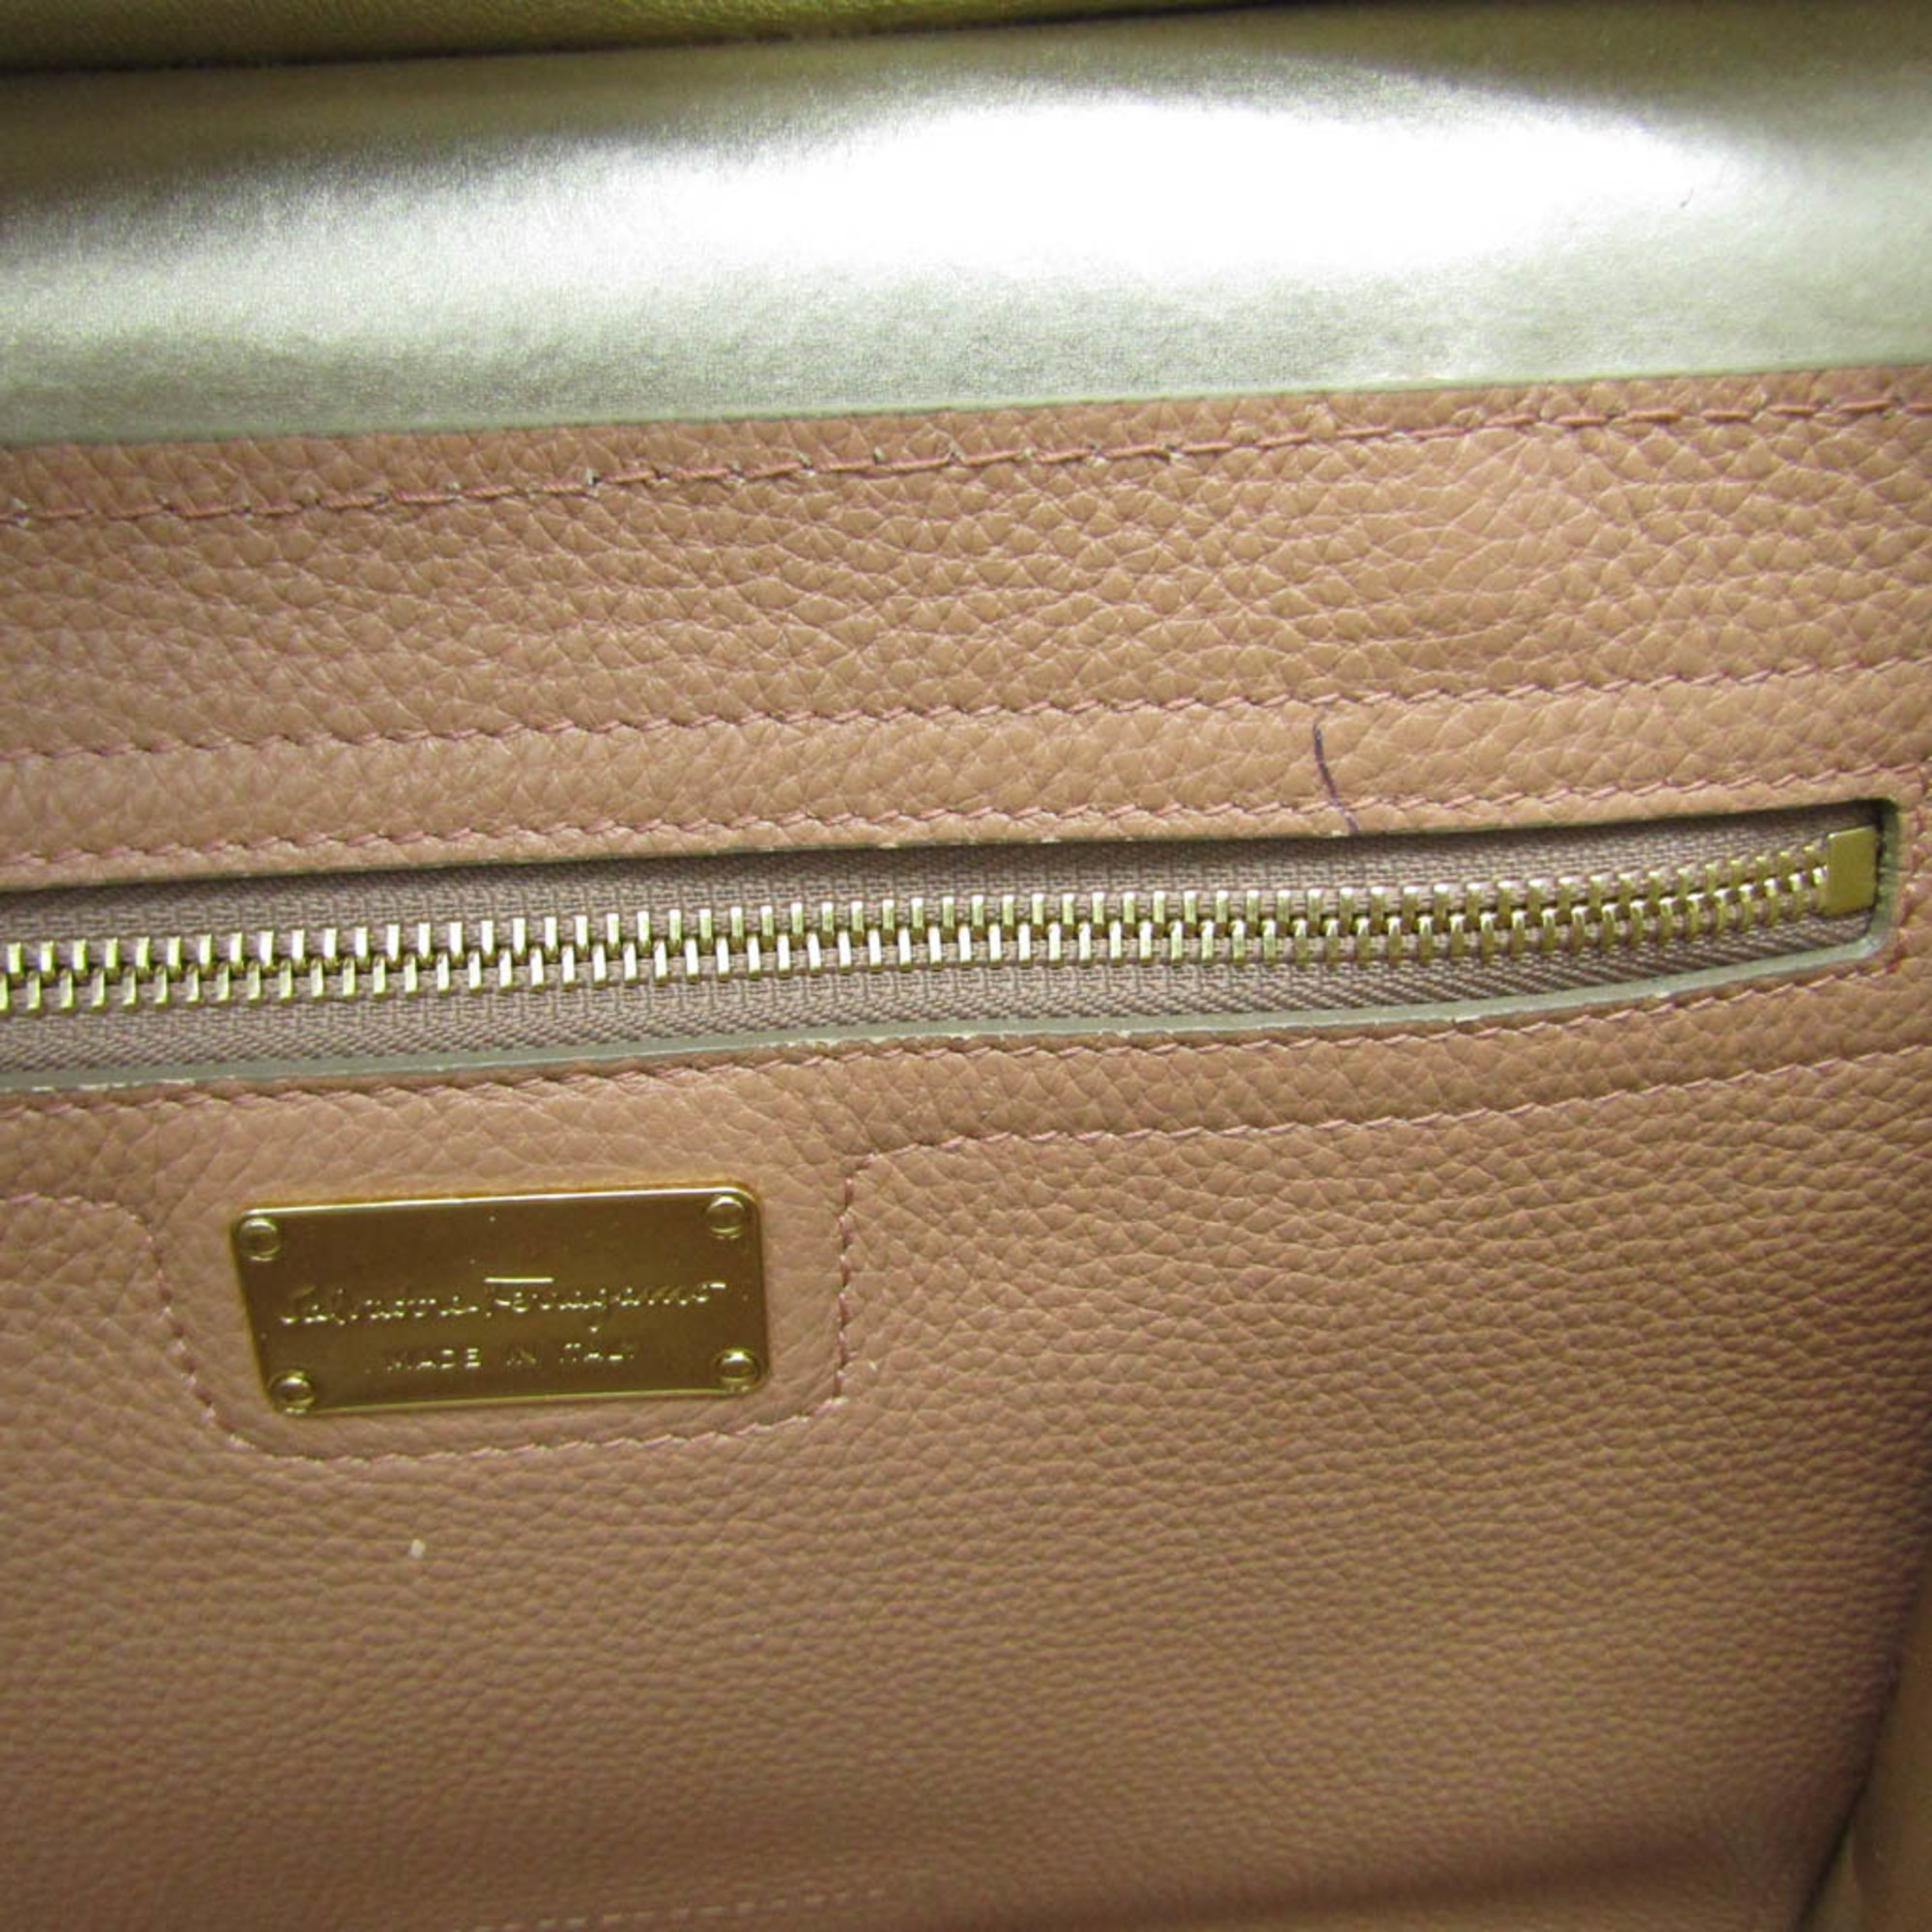 Salvatore Ferragamo Gancini GG-21 F216 Women's Leather Tote Bag Gold,Pink Beige